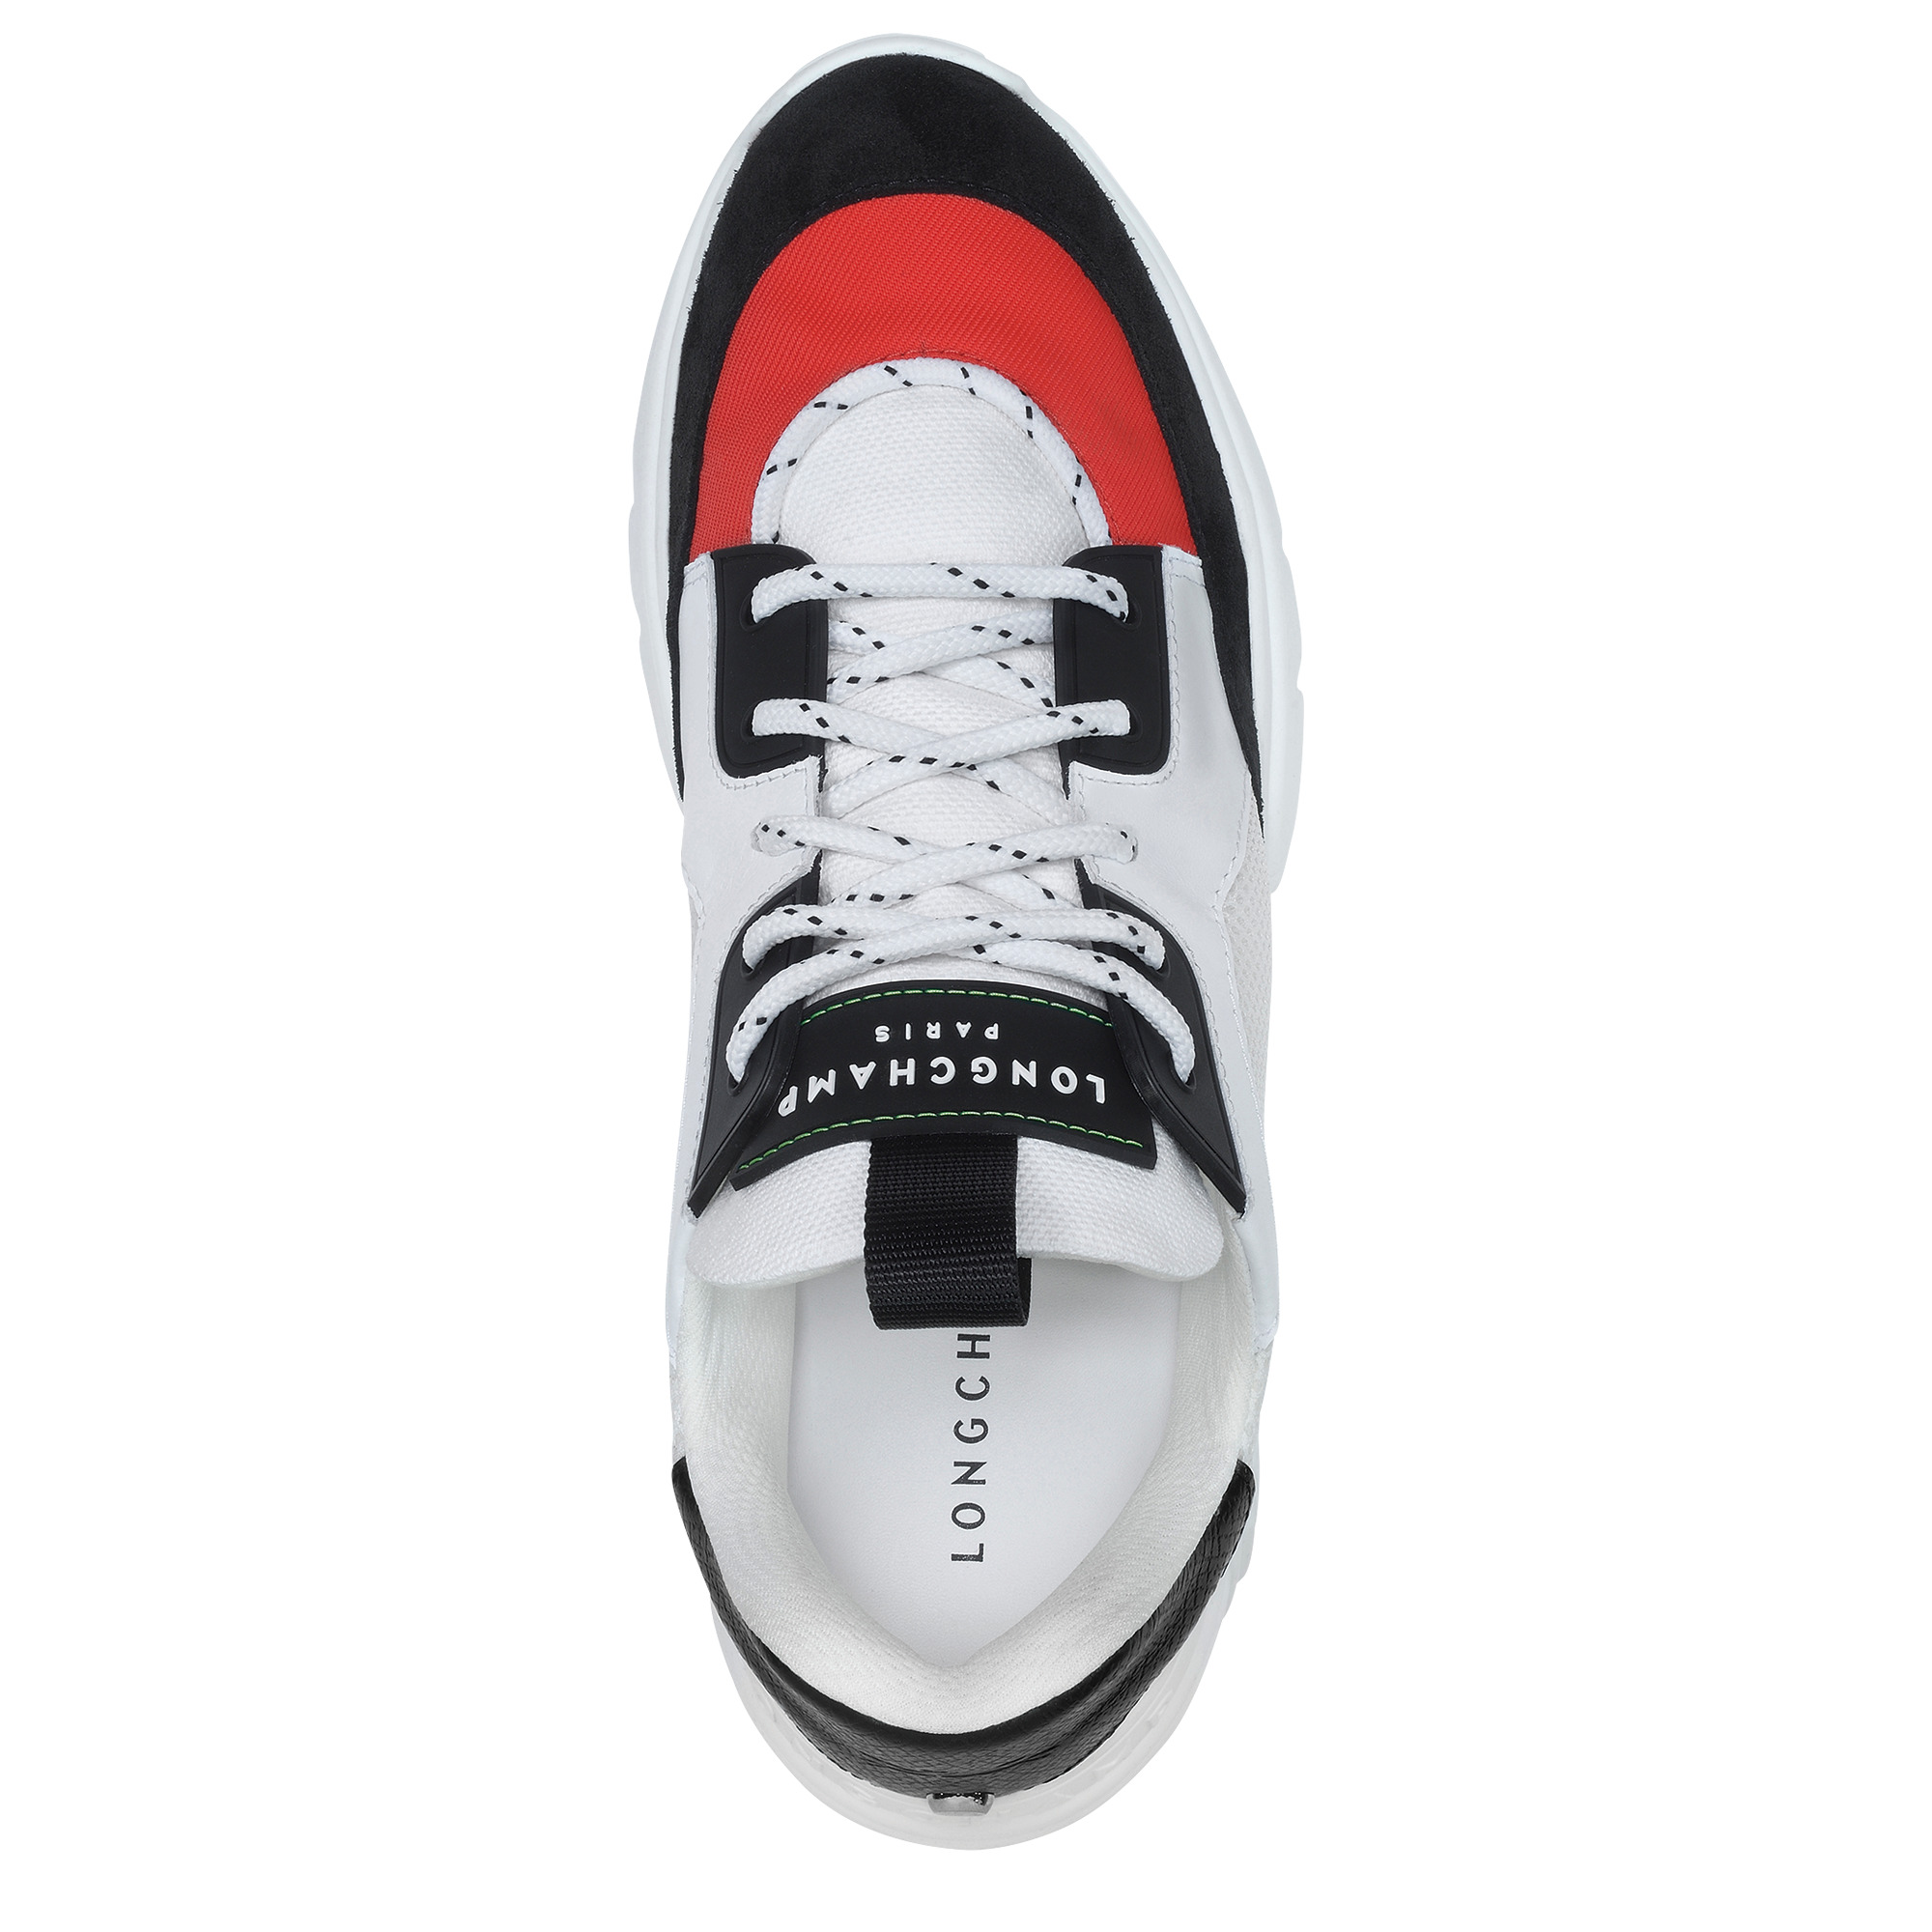 Freeminder Sneakers Poppy - Leather - 4